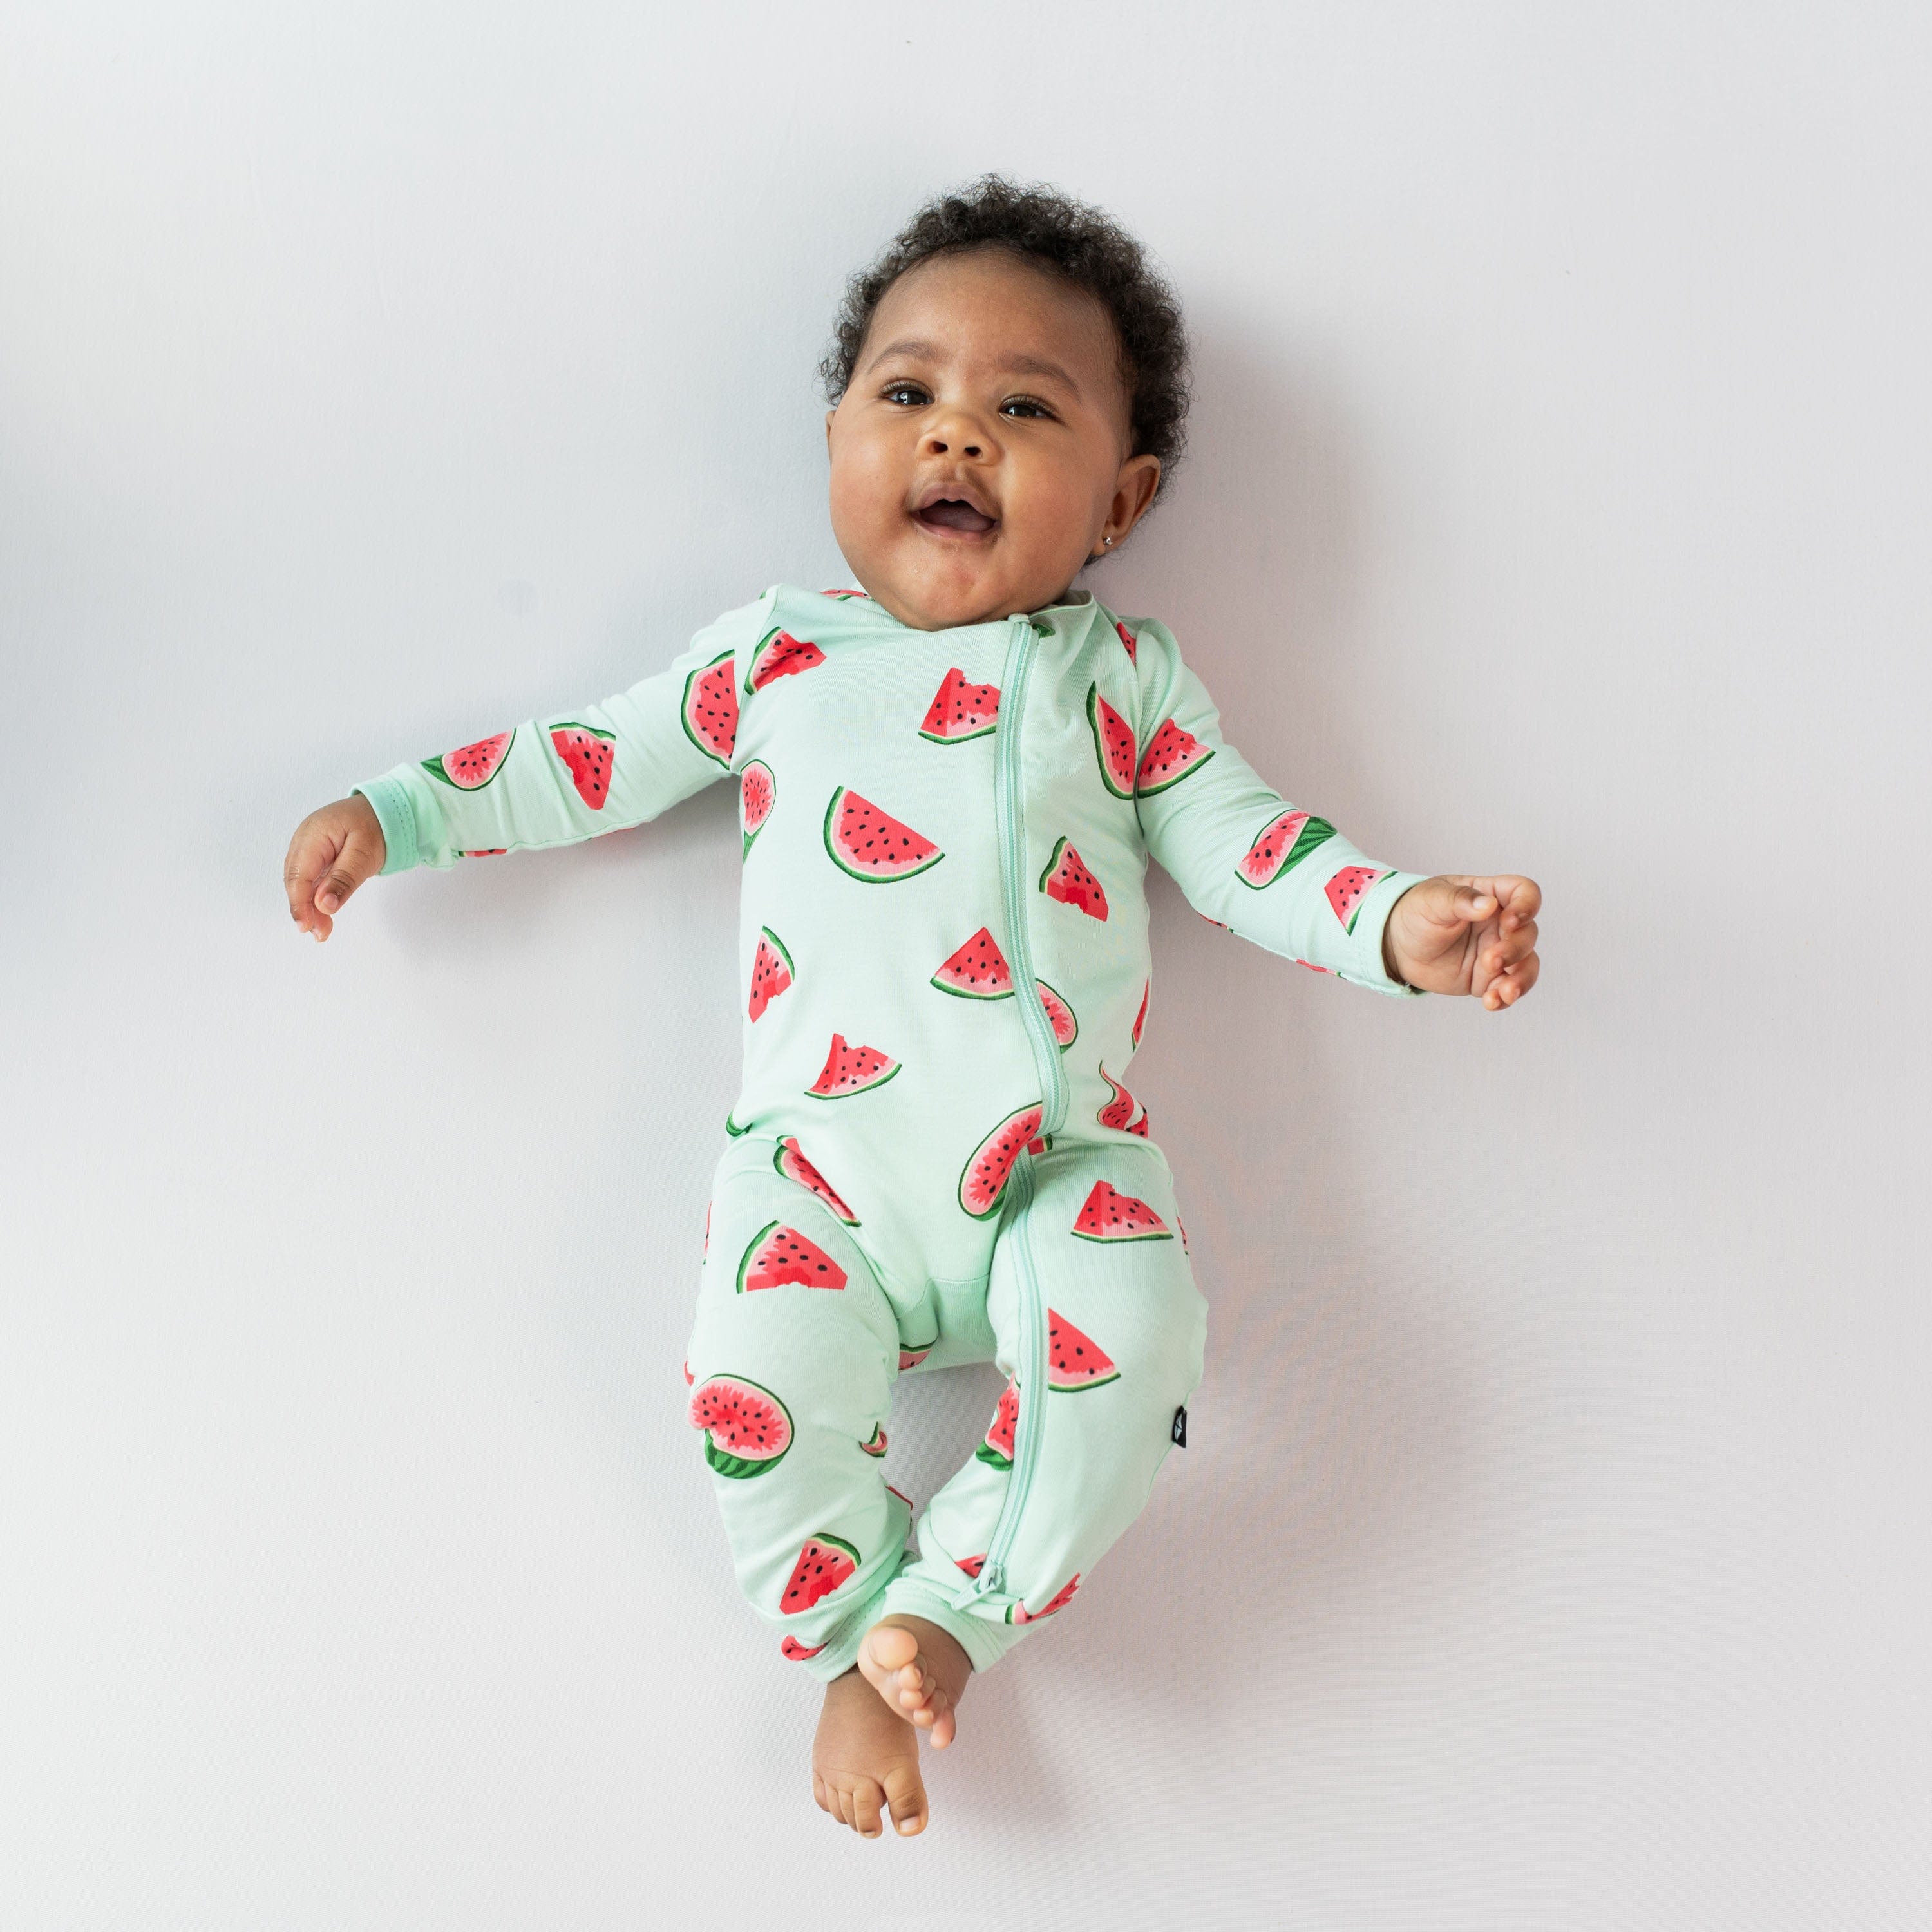 Infant wearing Kyte Baby Zippered Romper in Watermelon